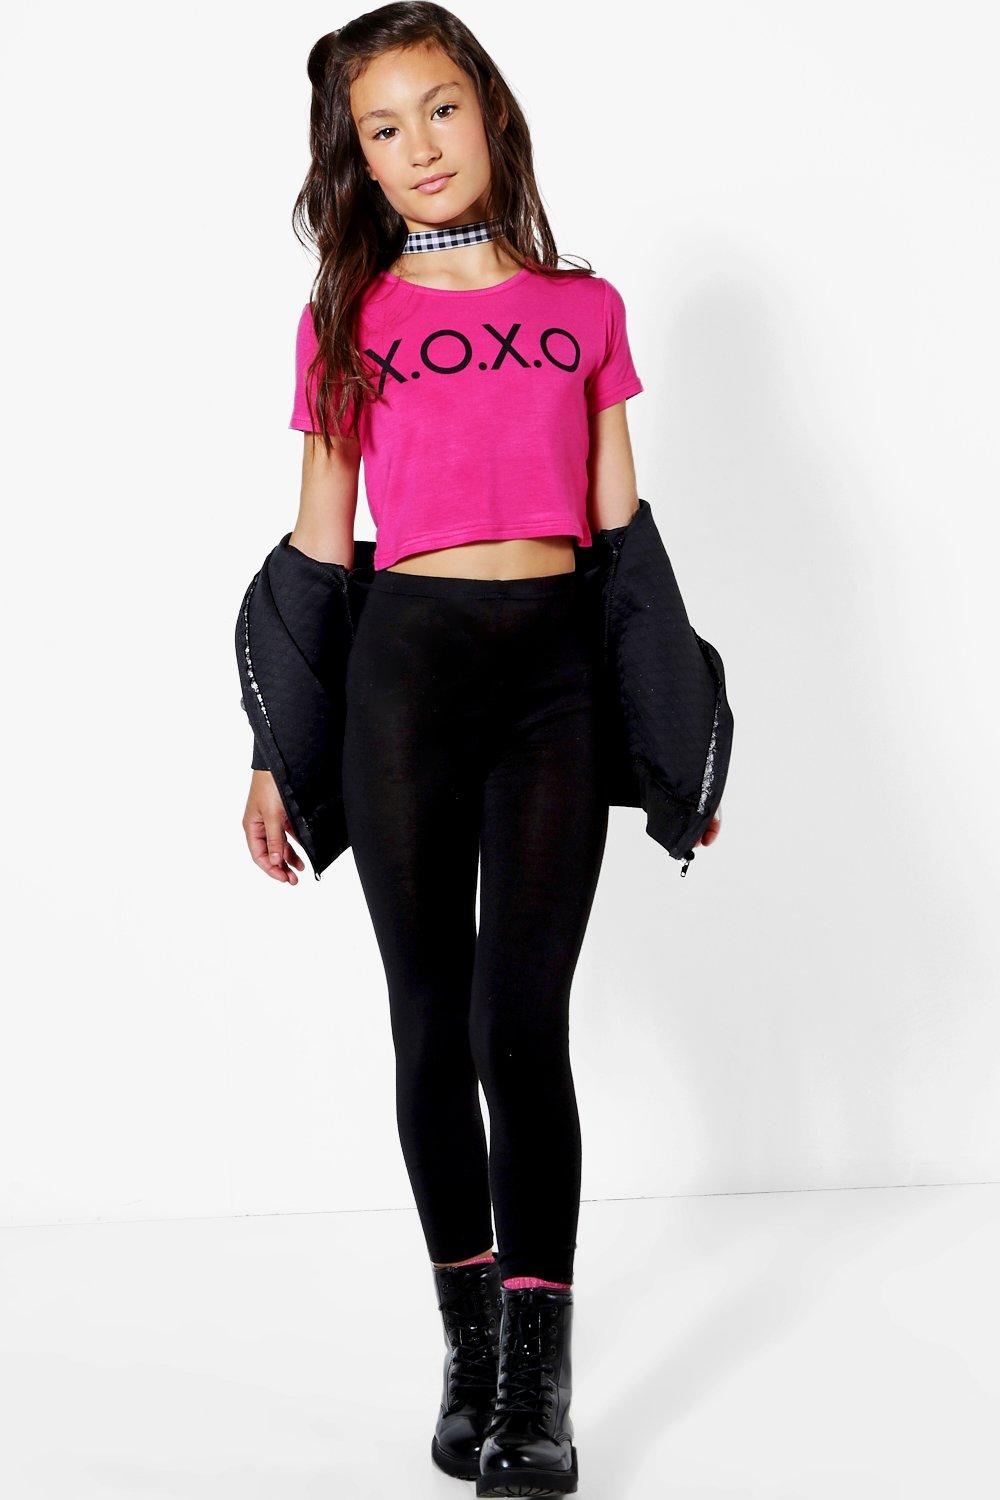 Girls XOXO Crop Top \u0026 Legging Set | boohoo